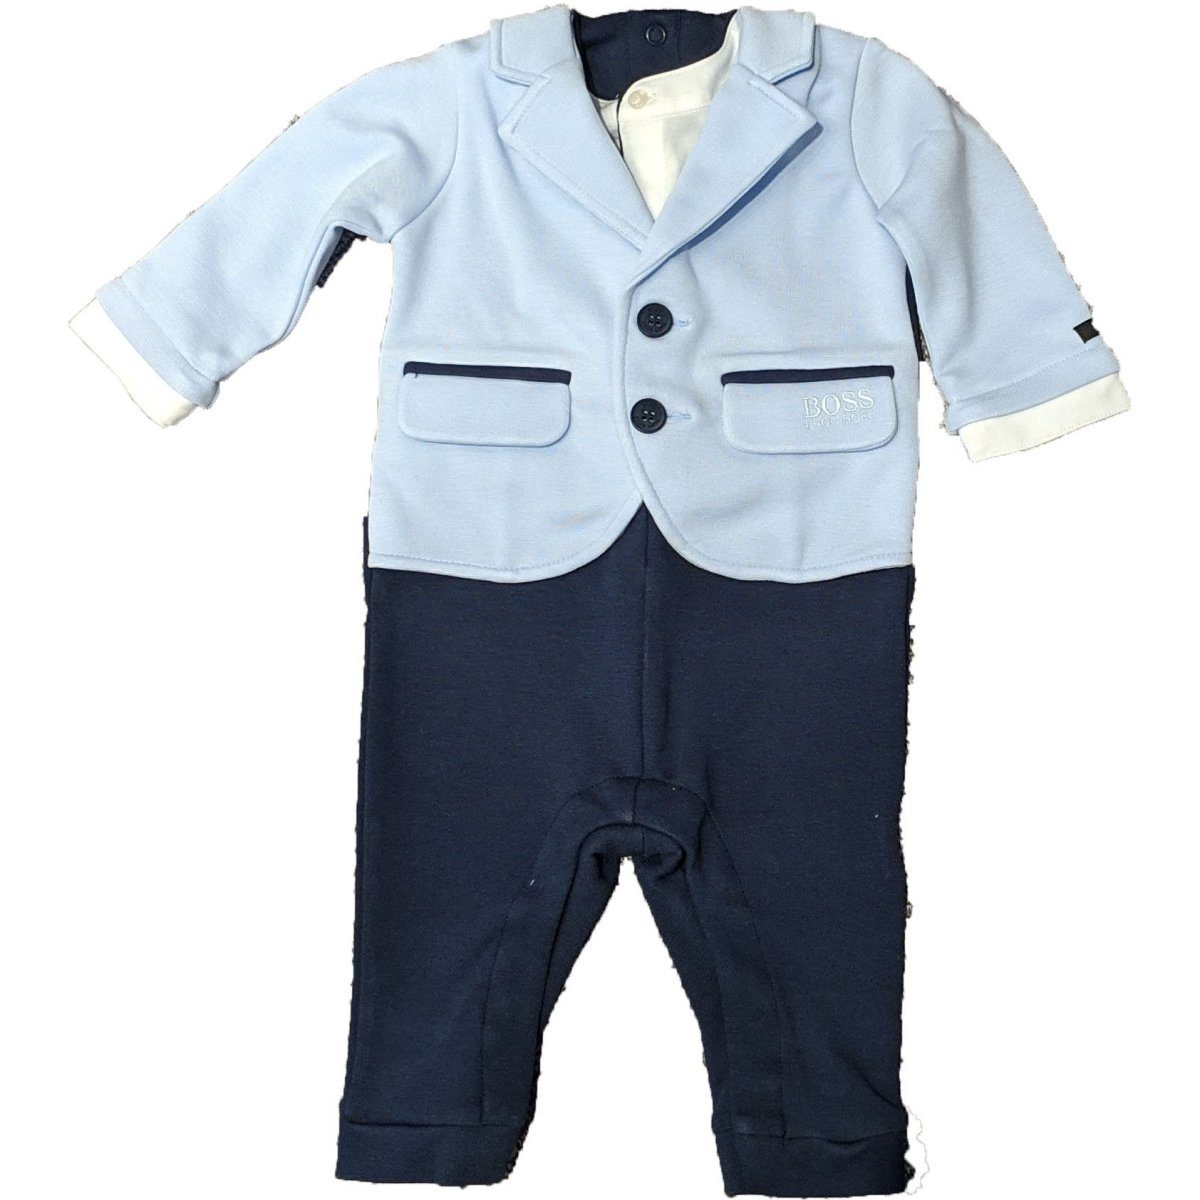 Hugo Boss Baby One Piece Dressy Outfit J94219 Suits (Boys) Hugo Boss 